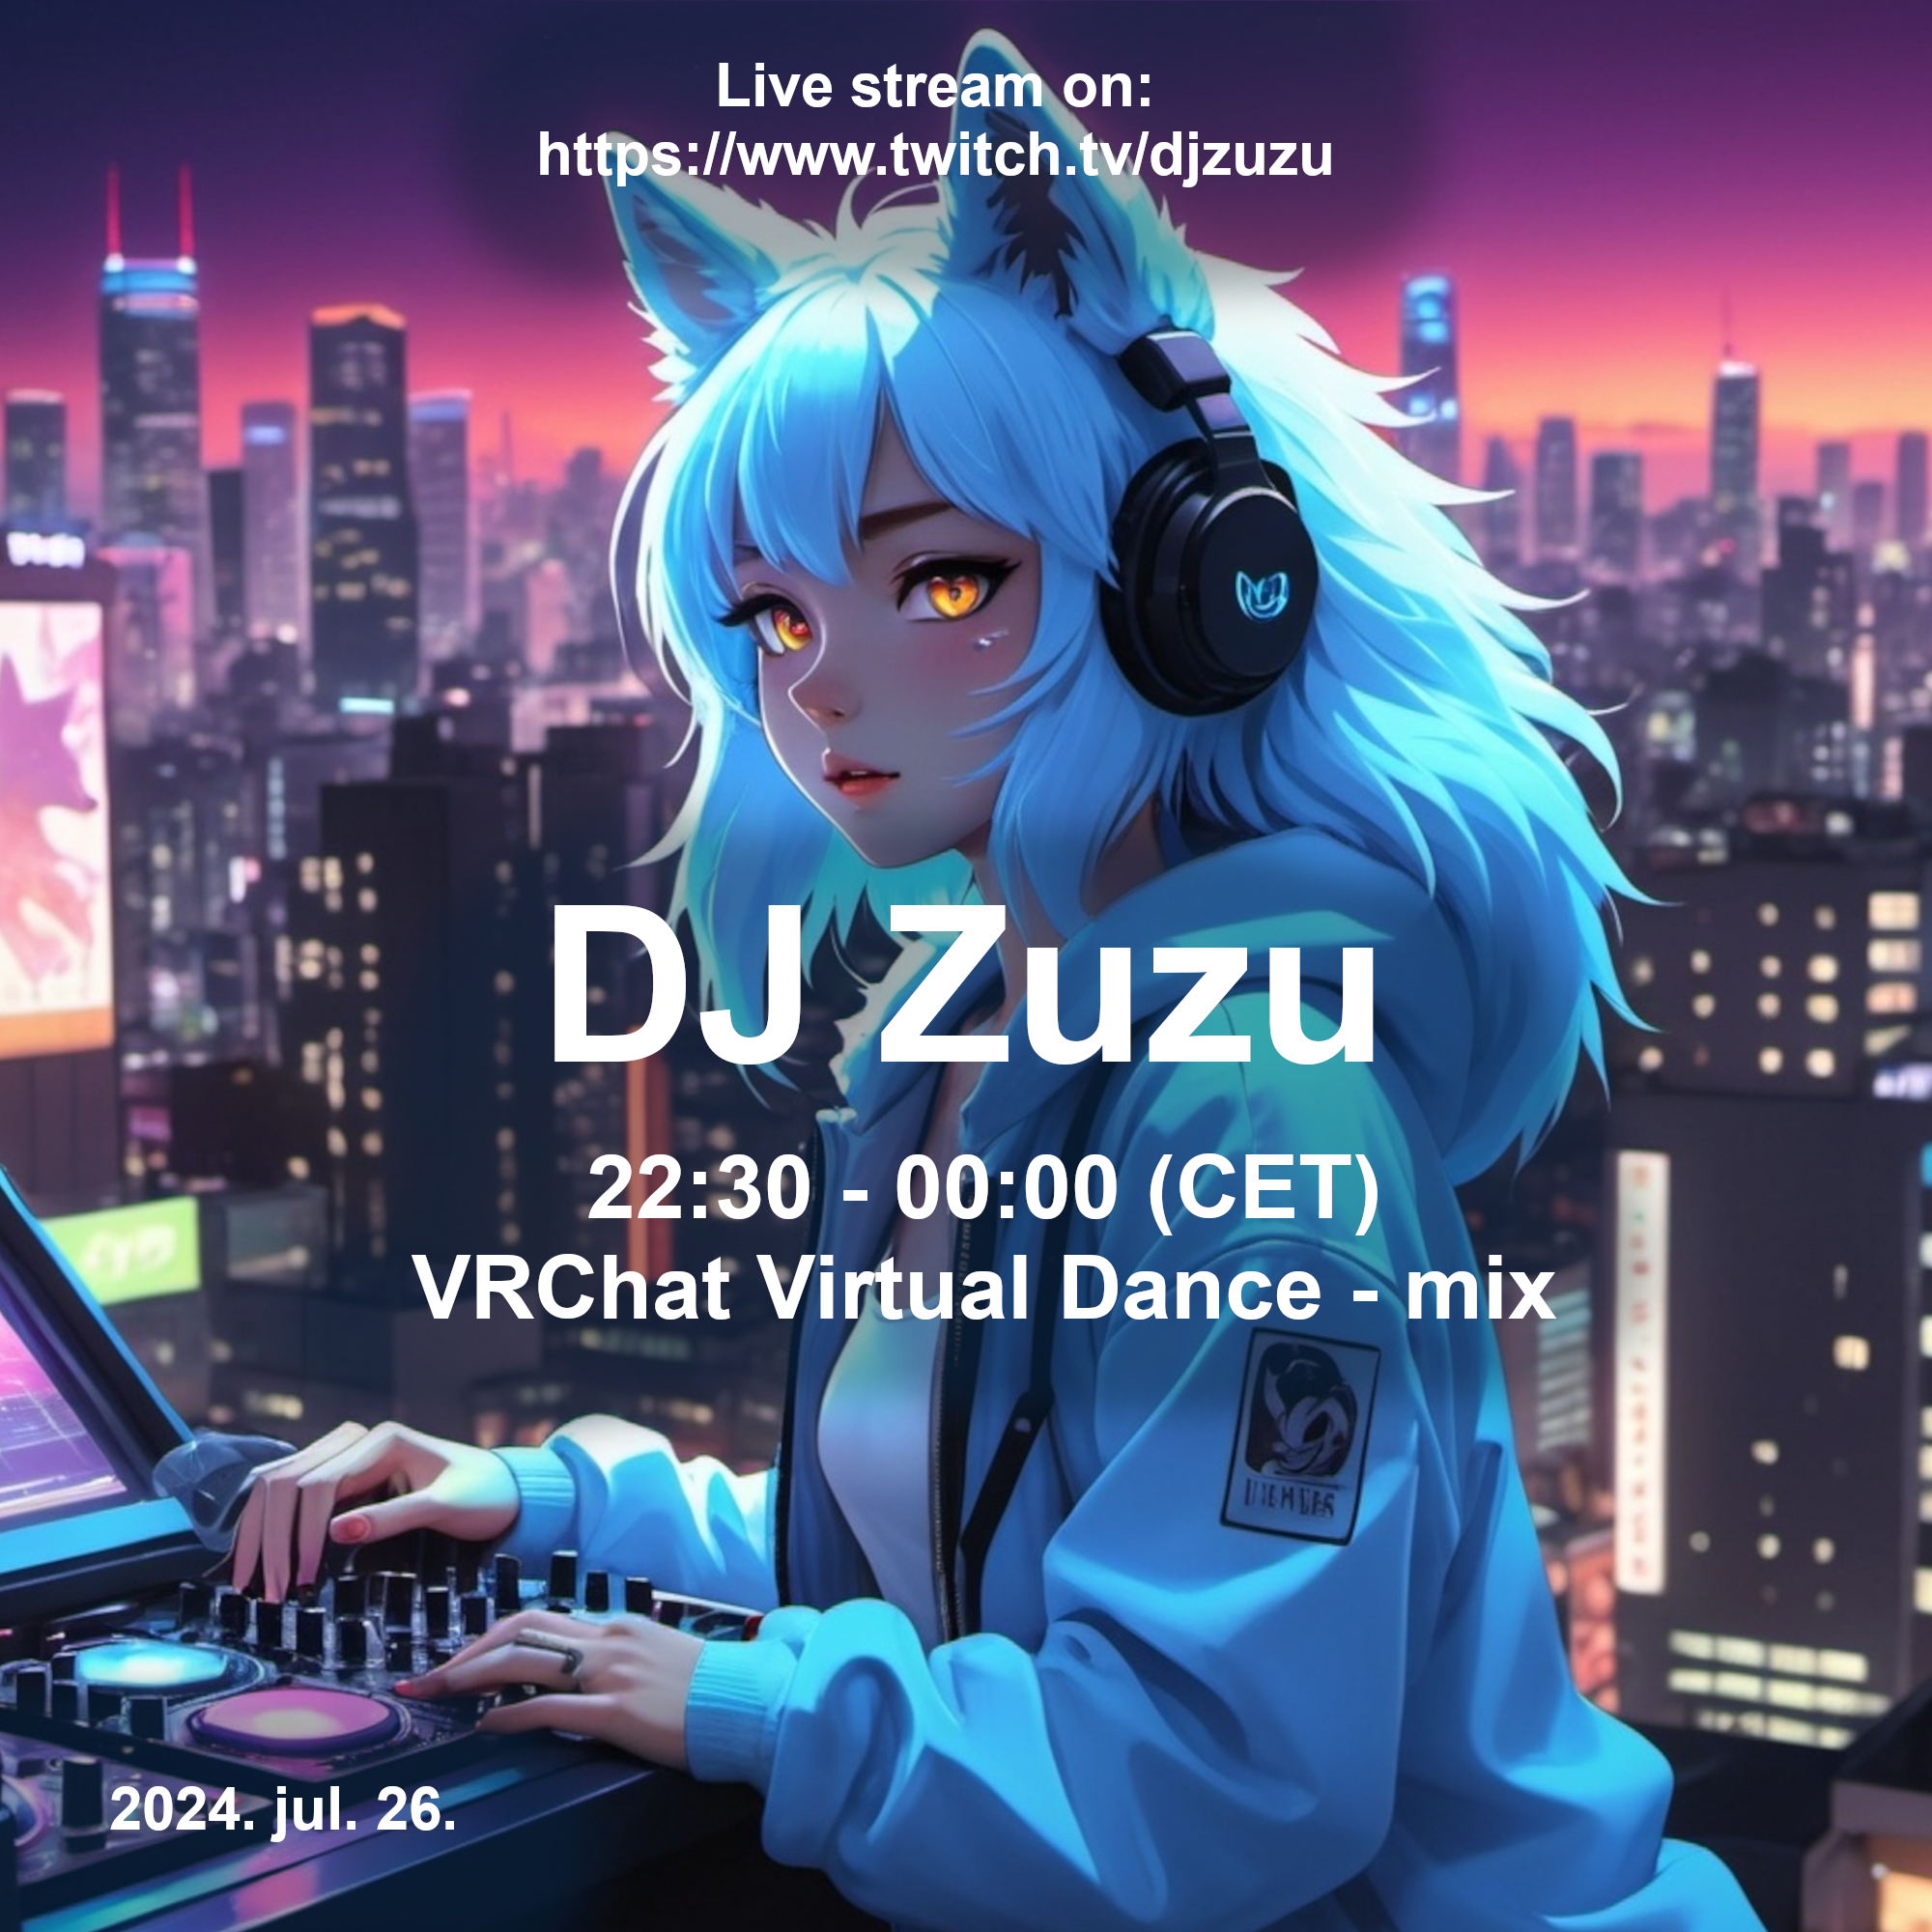 Dj Zuzu VRChat Virtual Dance Mix event flyer 20240726